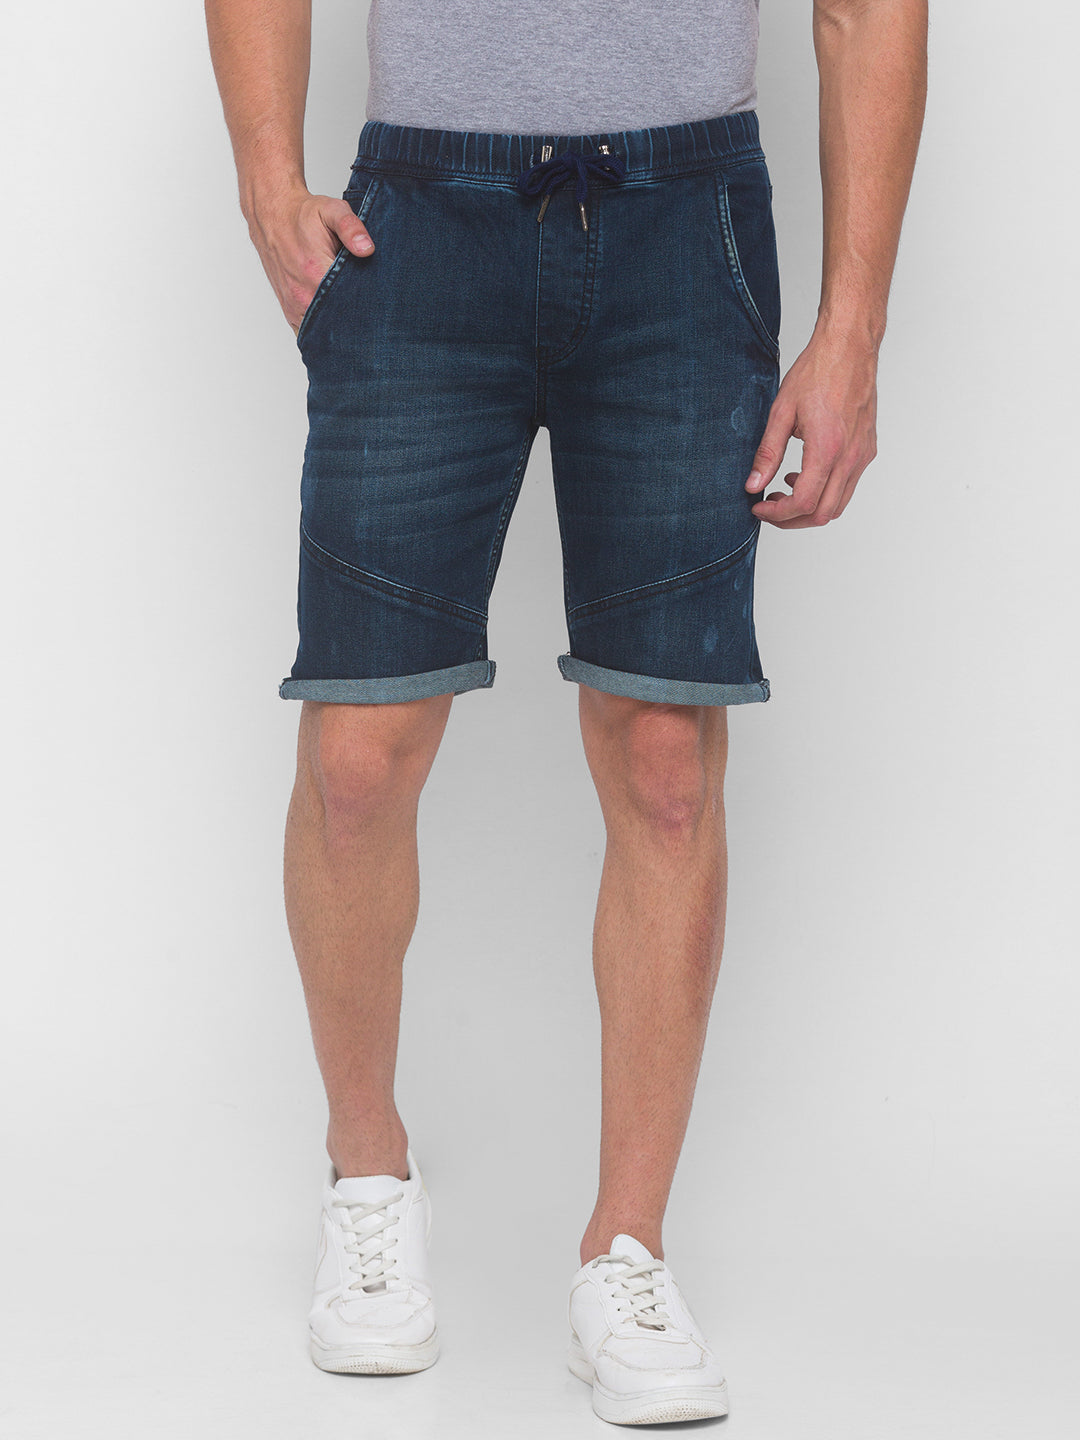 Navy Blue Denim Shorts